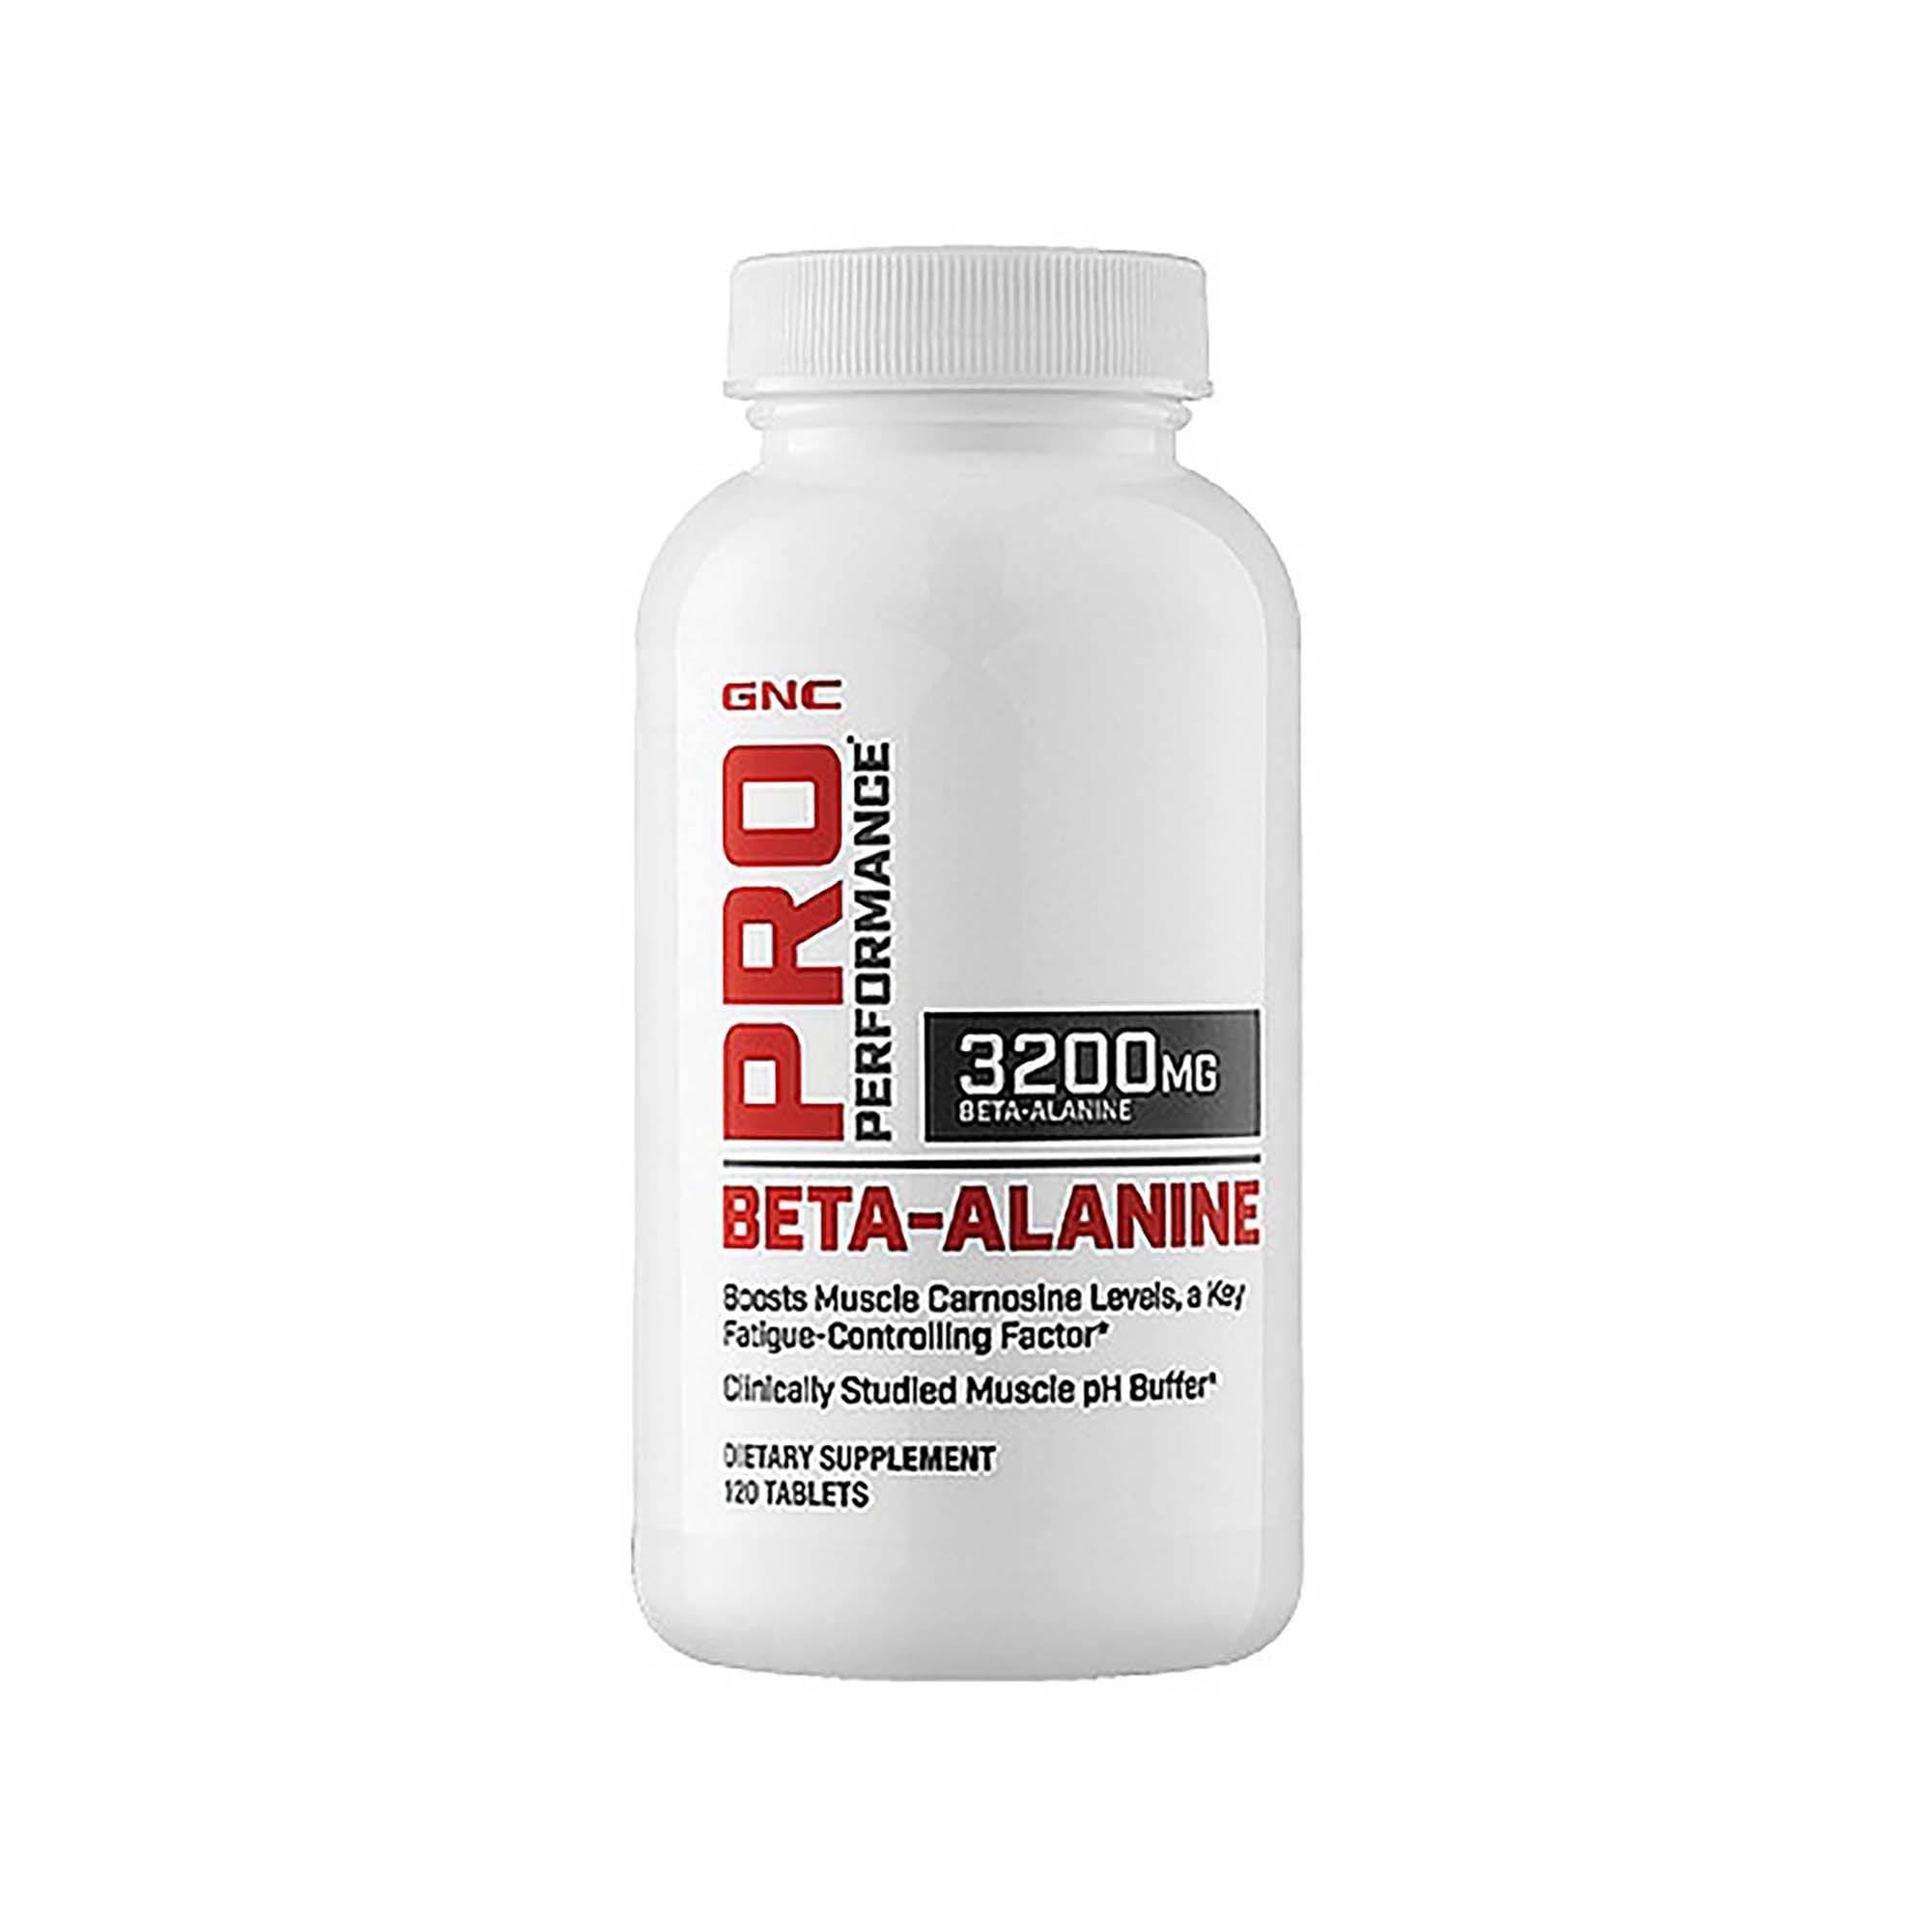 GNC Pro Performance Beta Alanine - Delays Fatigue & Prevents Muscle Breakdown